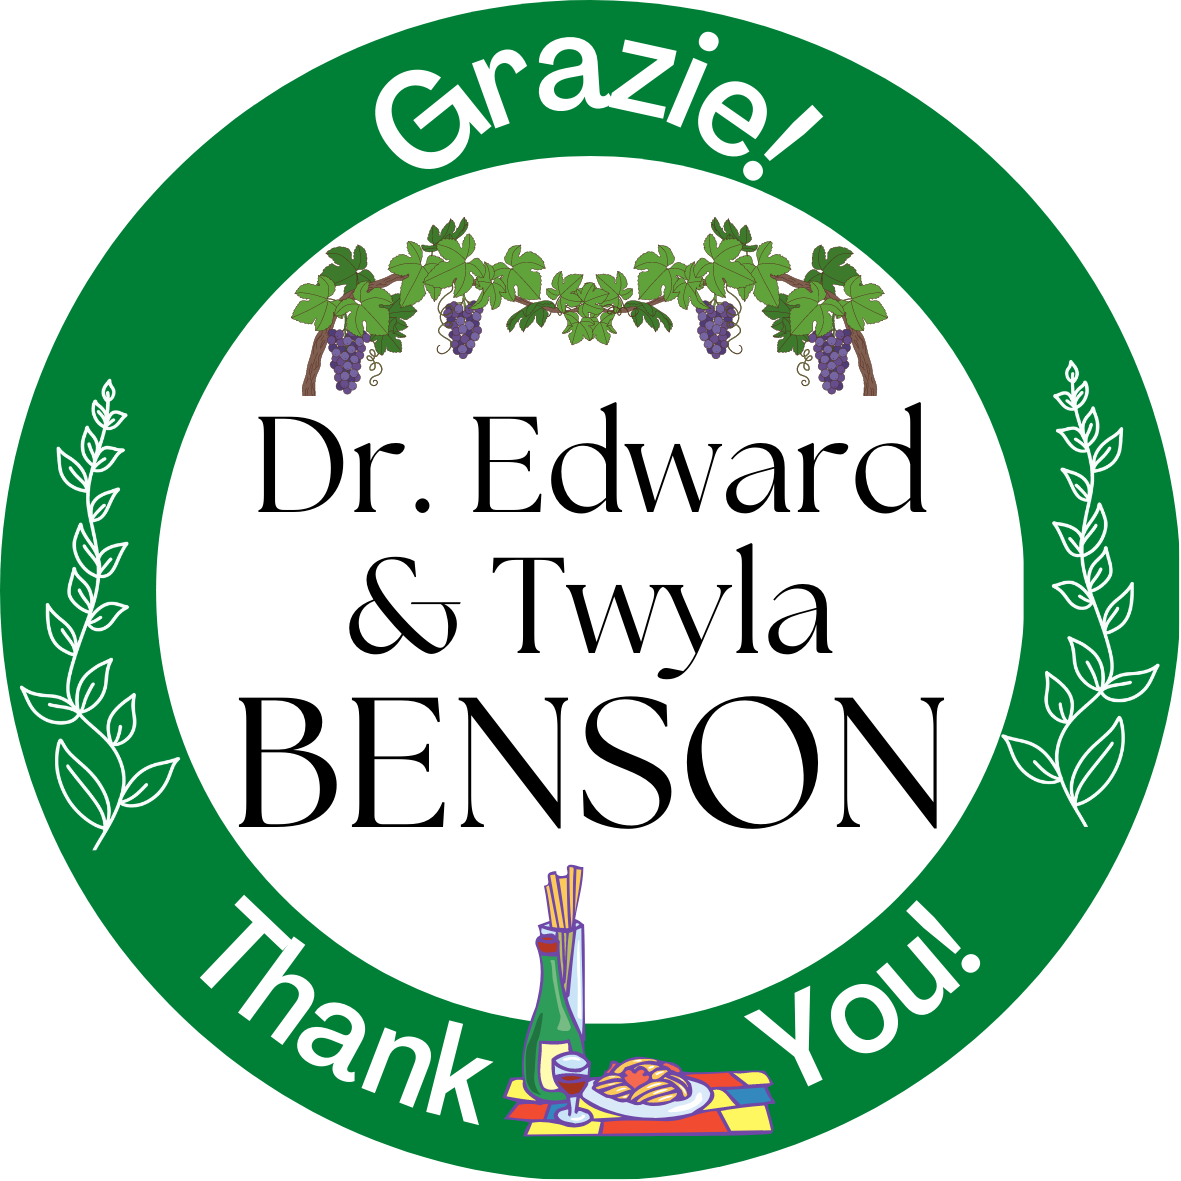 Dr. Edward and Twyla Benson Napoli Sponsor